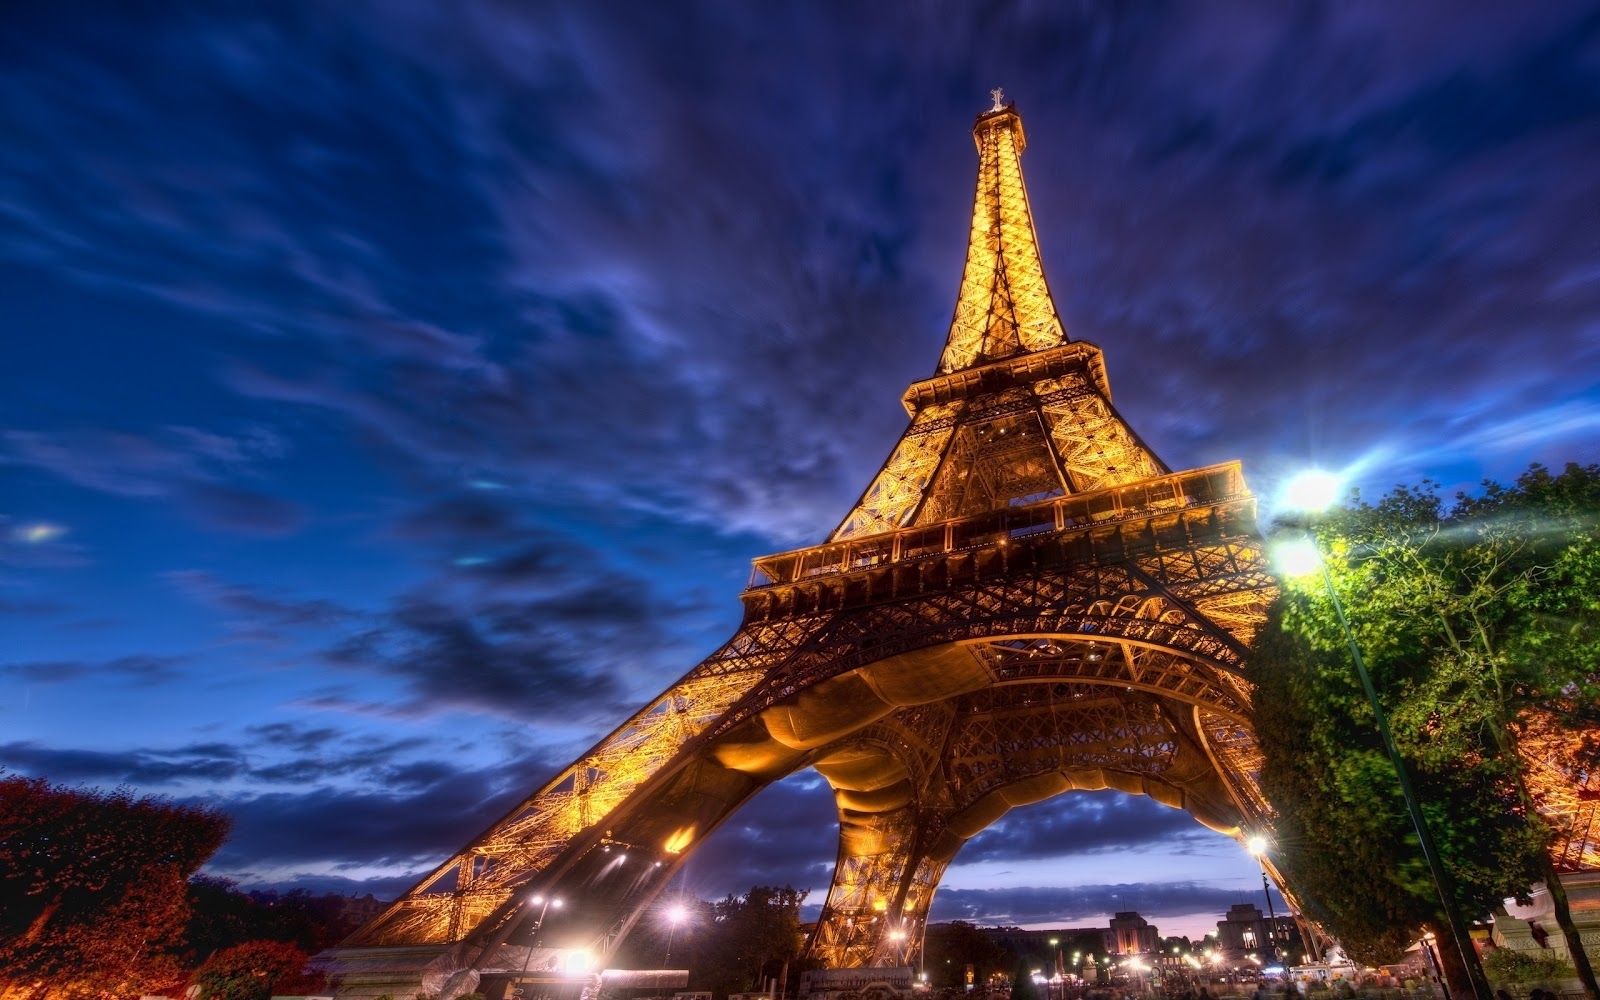 10 Best Eiffel Tower Desktop Wallpaper Full Hd 1080p For Pc Background 2021